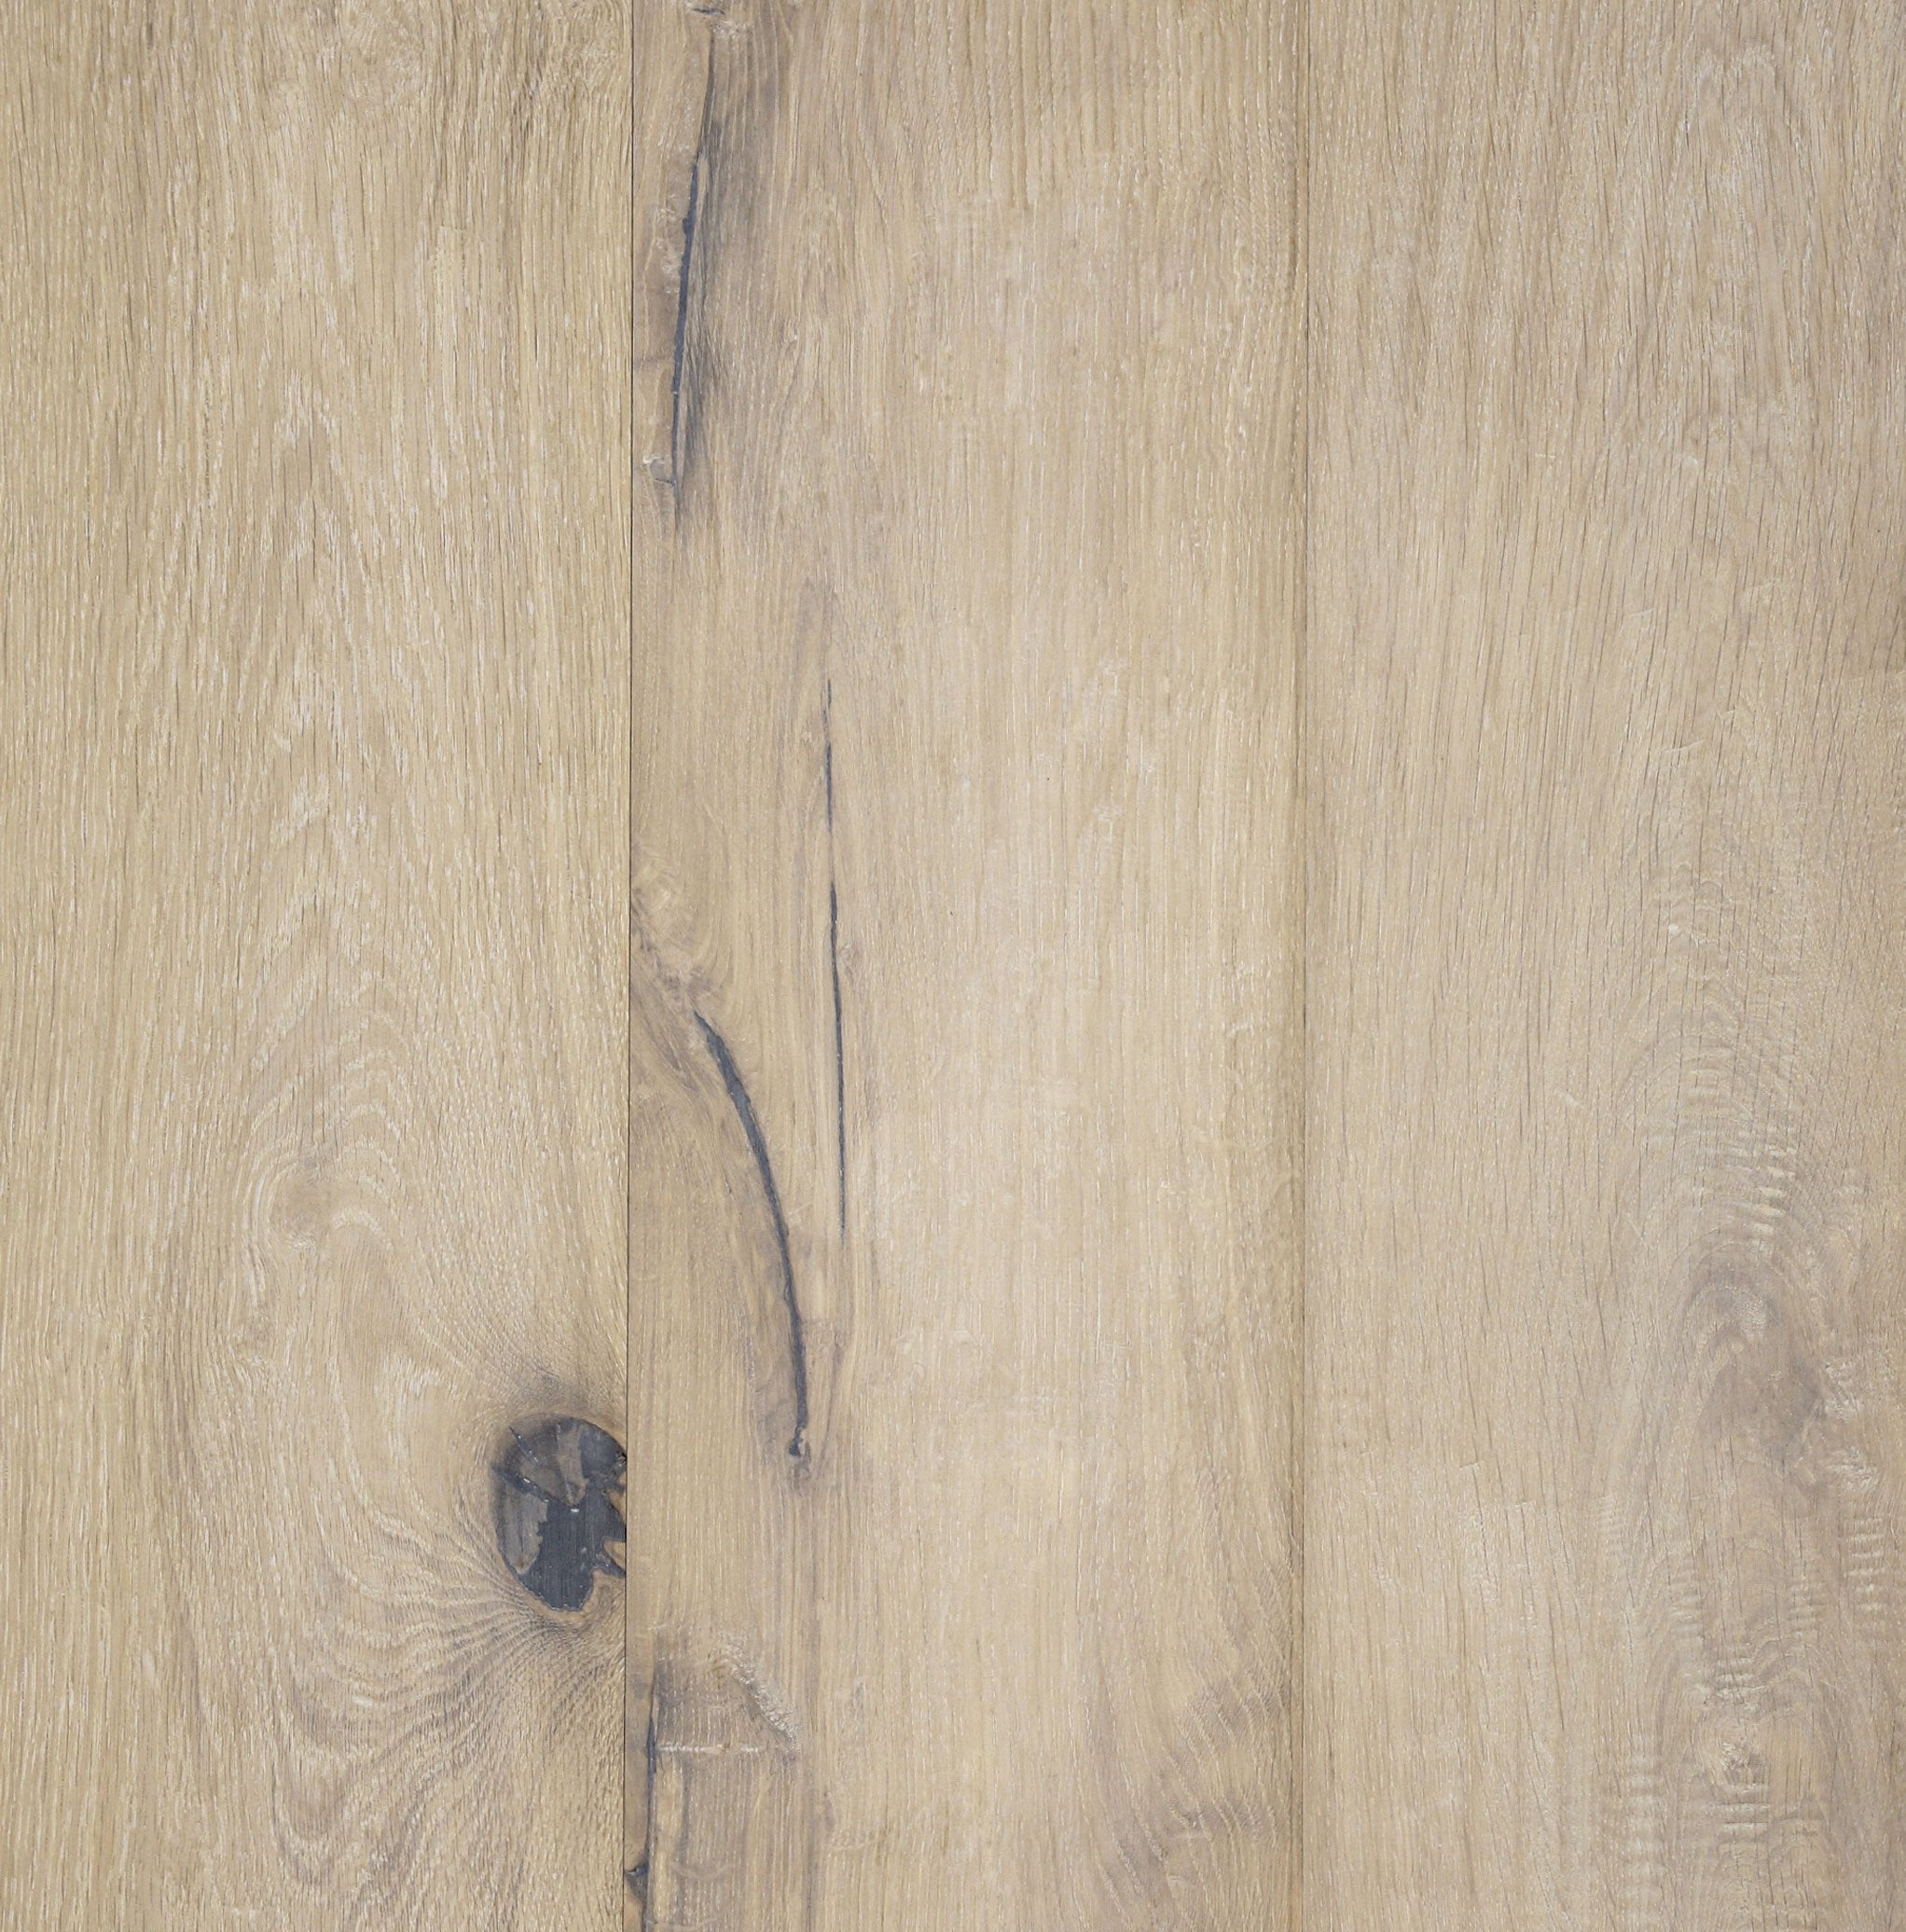 teka landscape veneto german french white oak natural hardwood flooring plank white washed distributed by surface group international